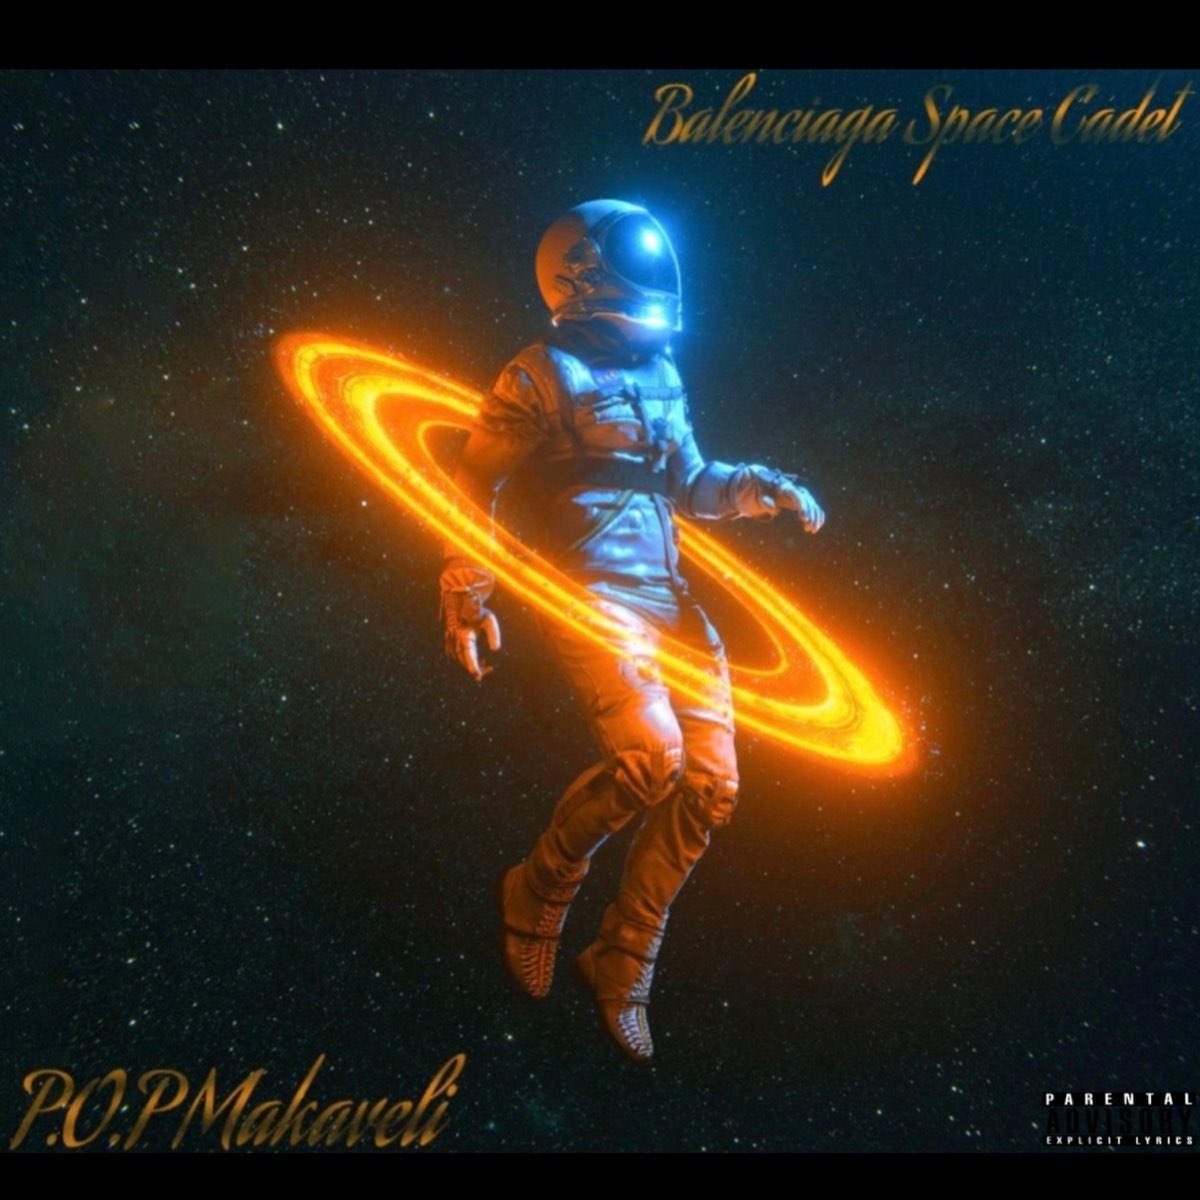 Balenciaga Space Cadet (EP) by P.O.P Makaveli on Apple Music